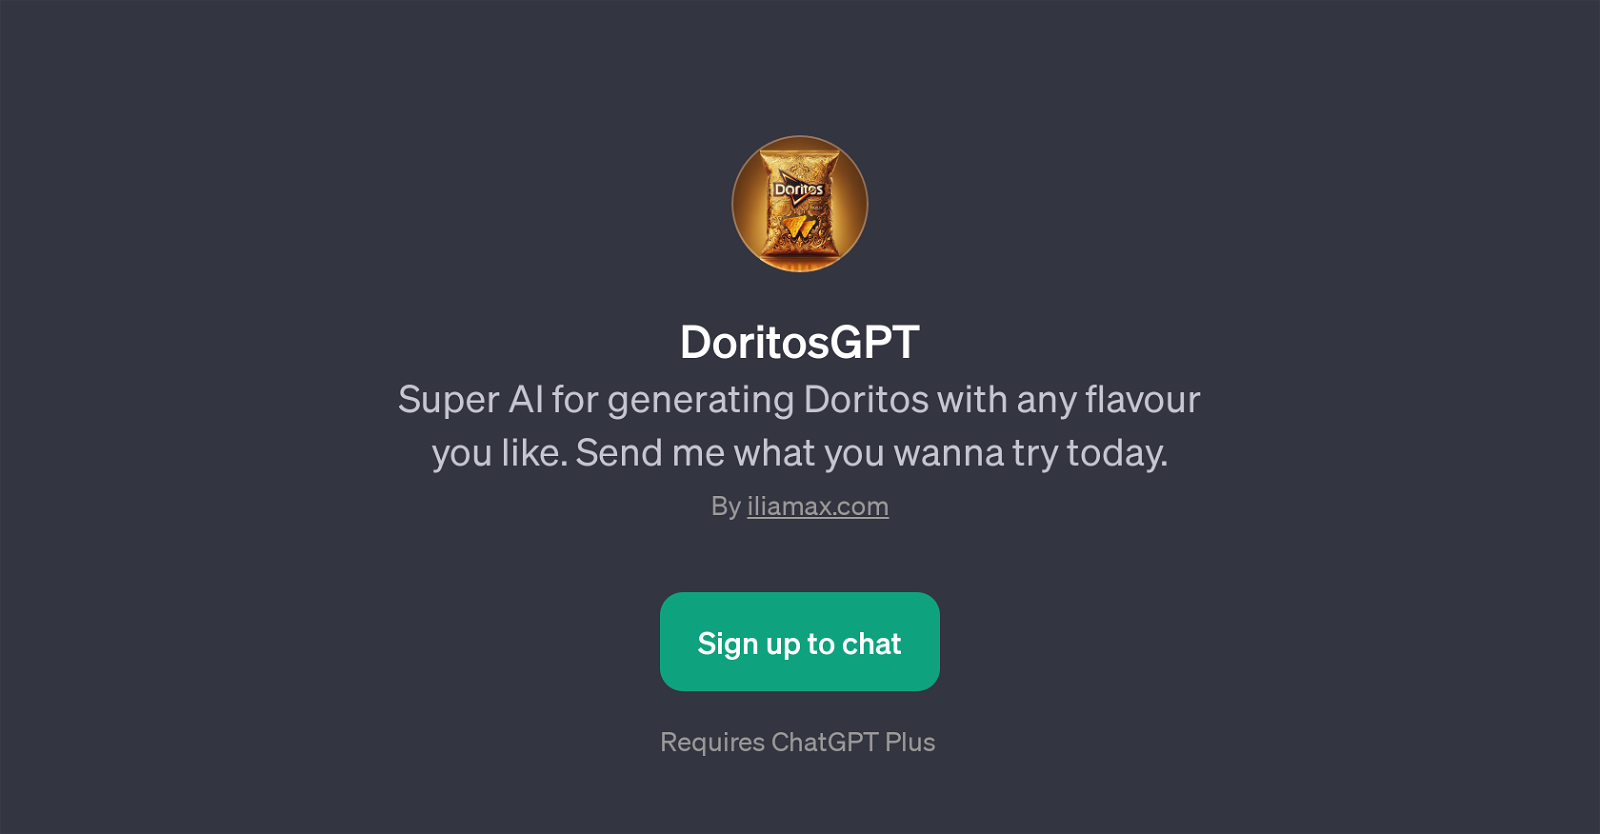 DoritosGPT website